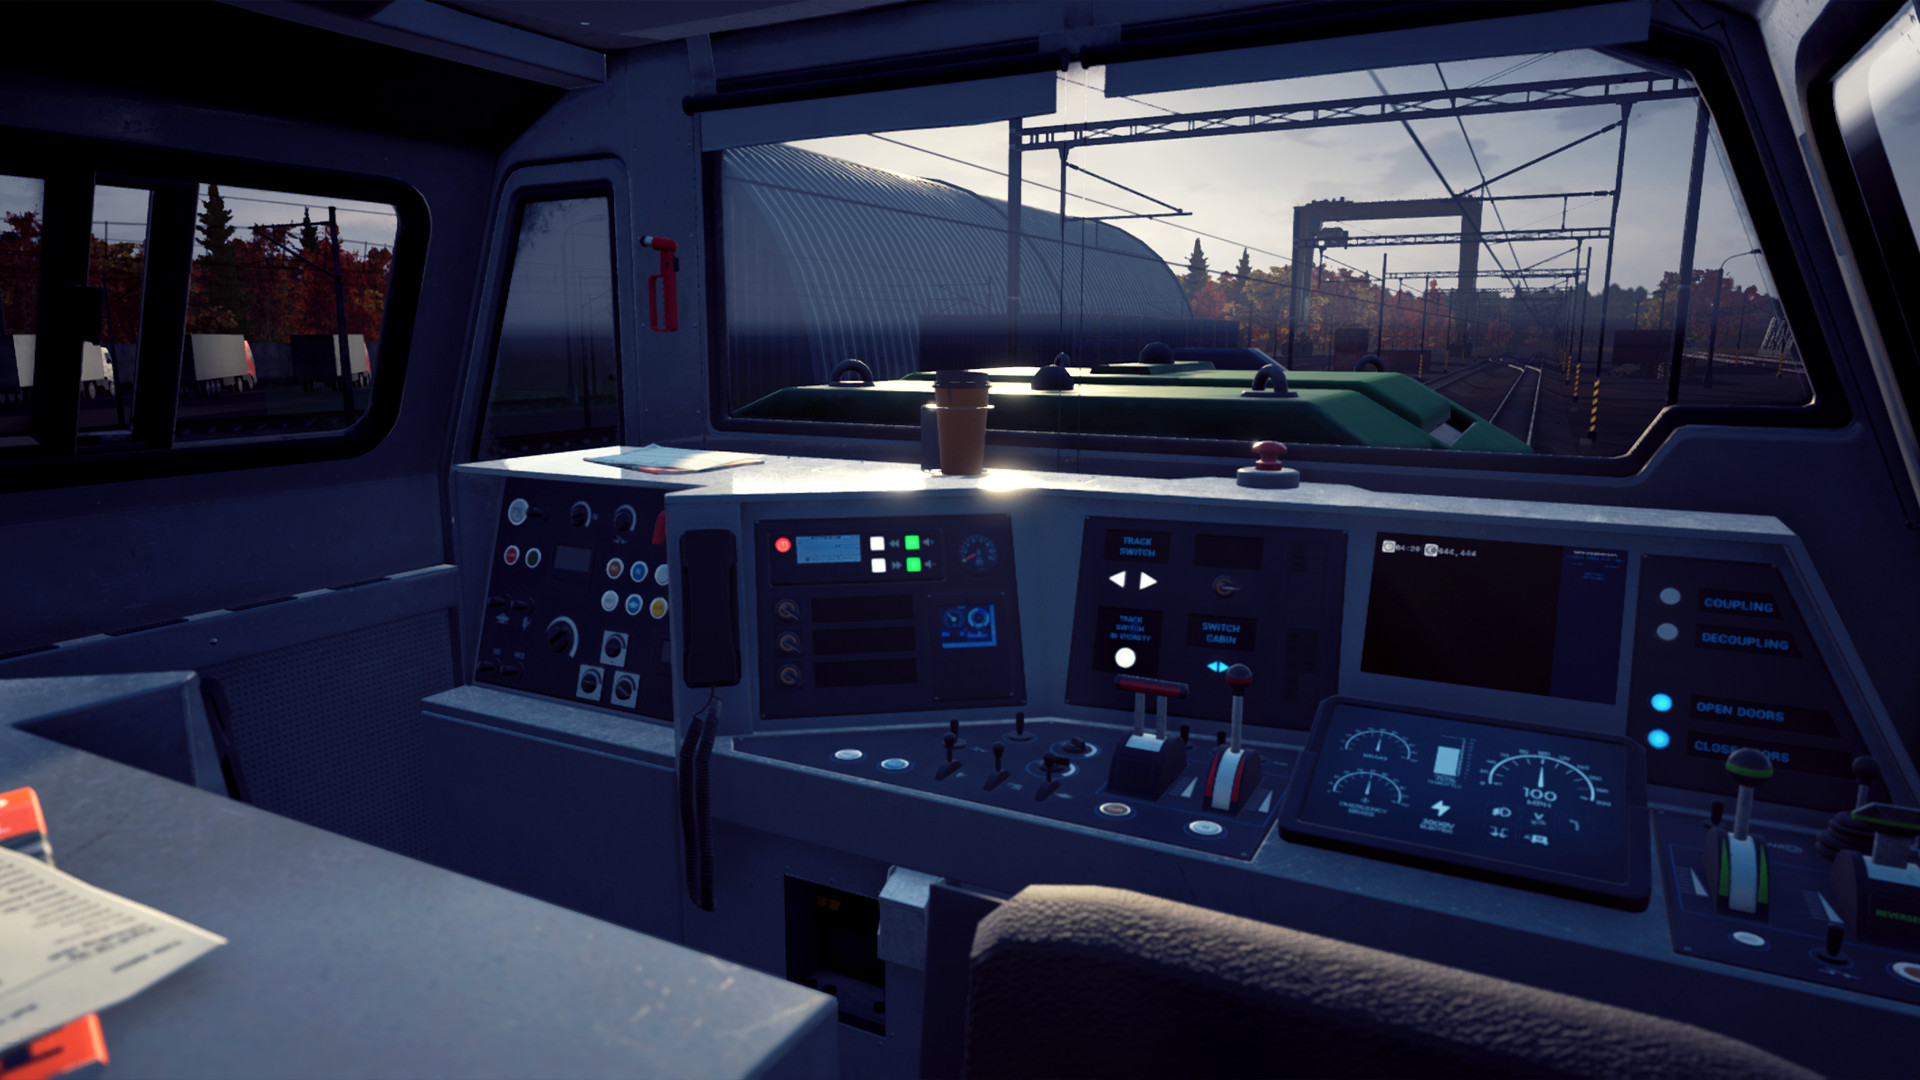 Train Life: A Railway Simulator Steam Account, 4.52$